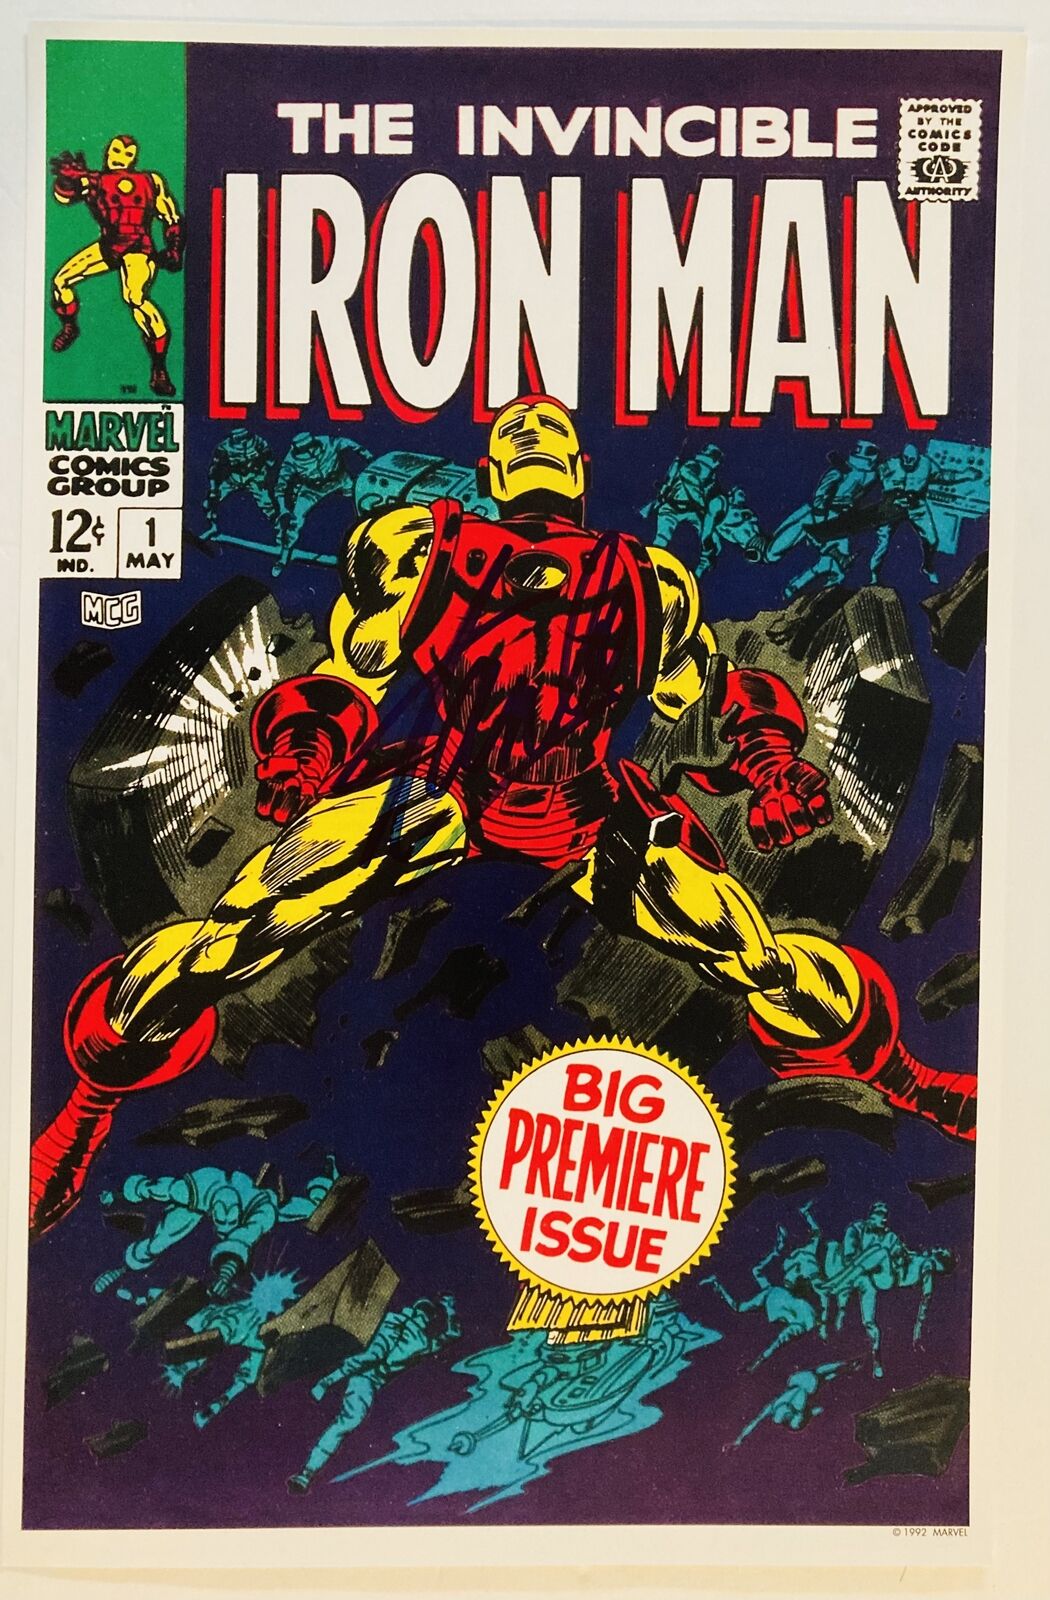 Stan Lee Signed Iron Man #1 11x17 Marvel Art Lithograph 1993 LOA Cert